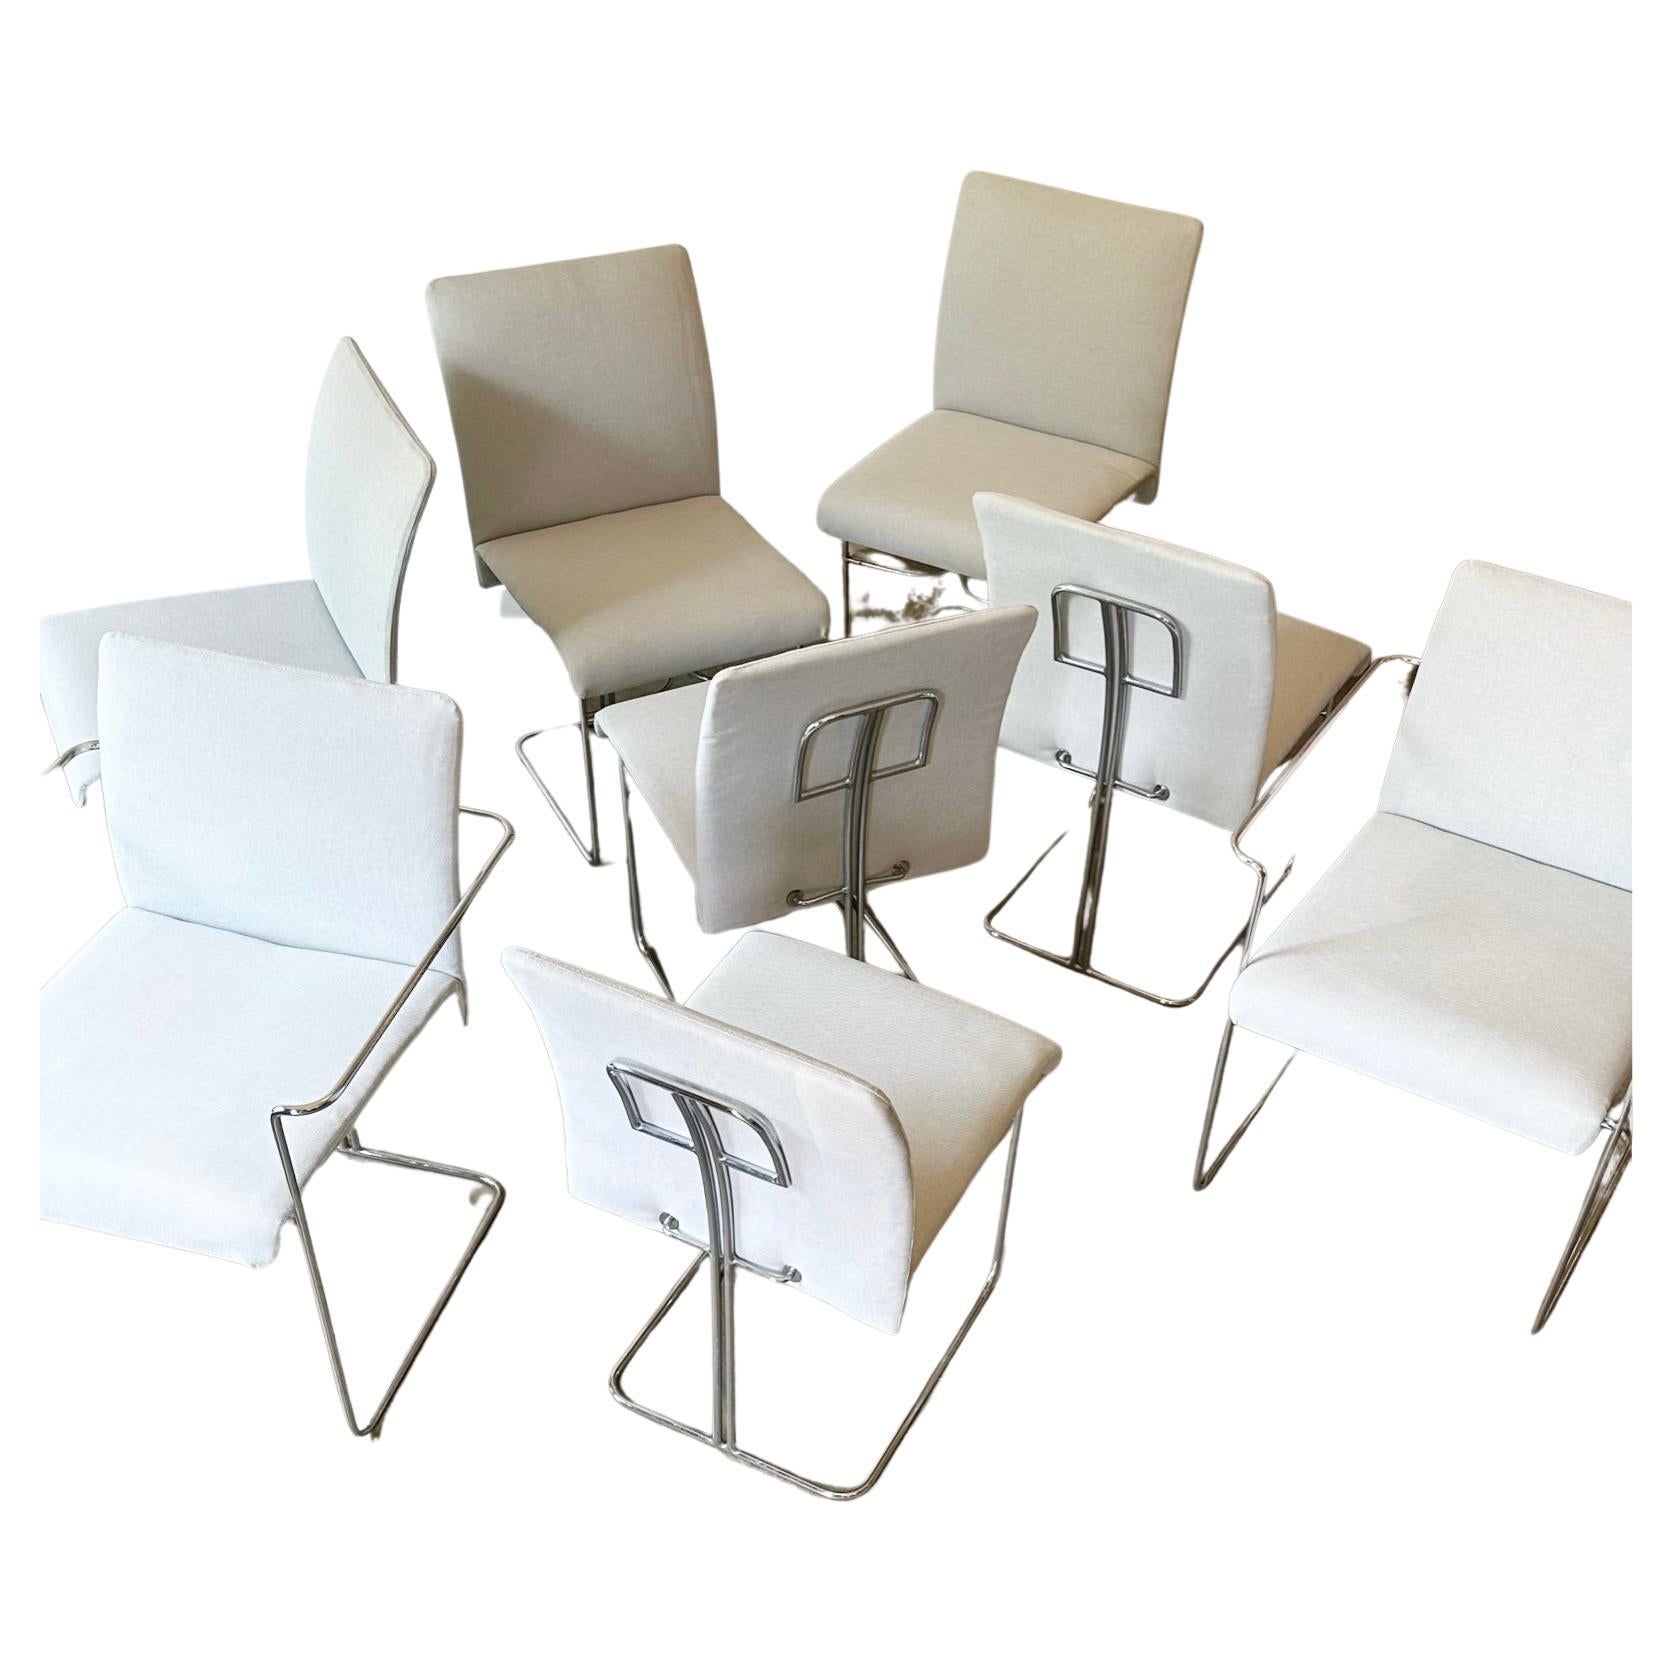 Set of 8 1970's Saporiti Italia Chrome Chairs by Ernesto Redaelli - Knoll Fabric For Sale